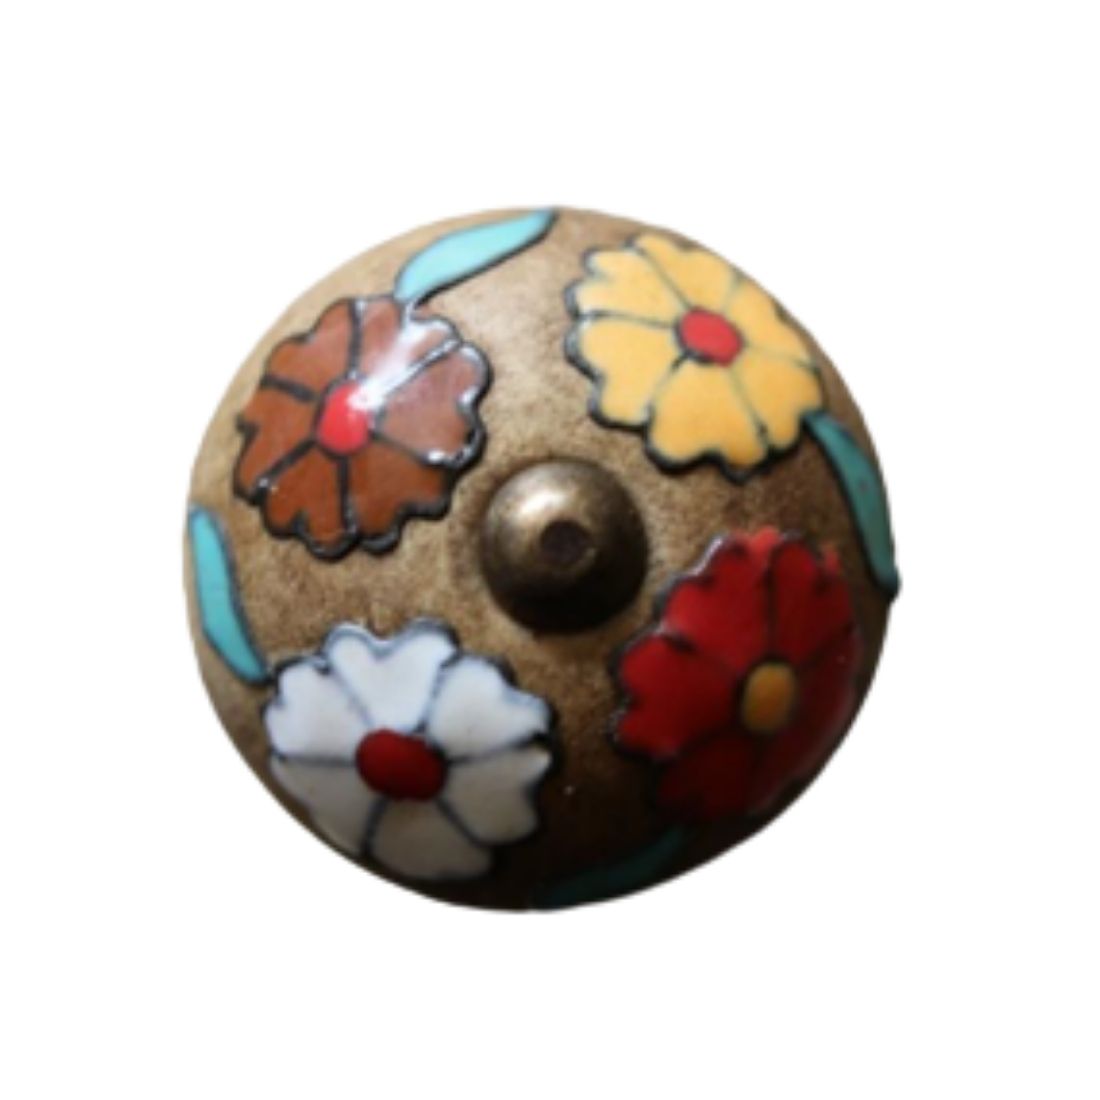 Ceramic Round Knob - Red, Brown, Yellow, White, Teal Flowers